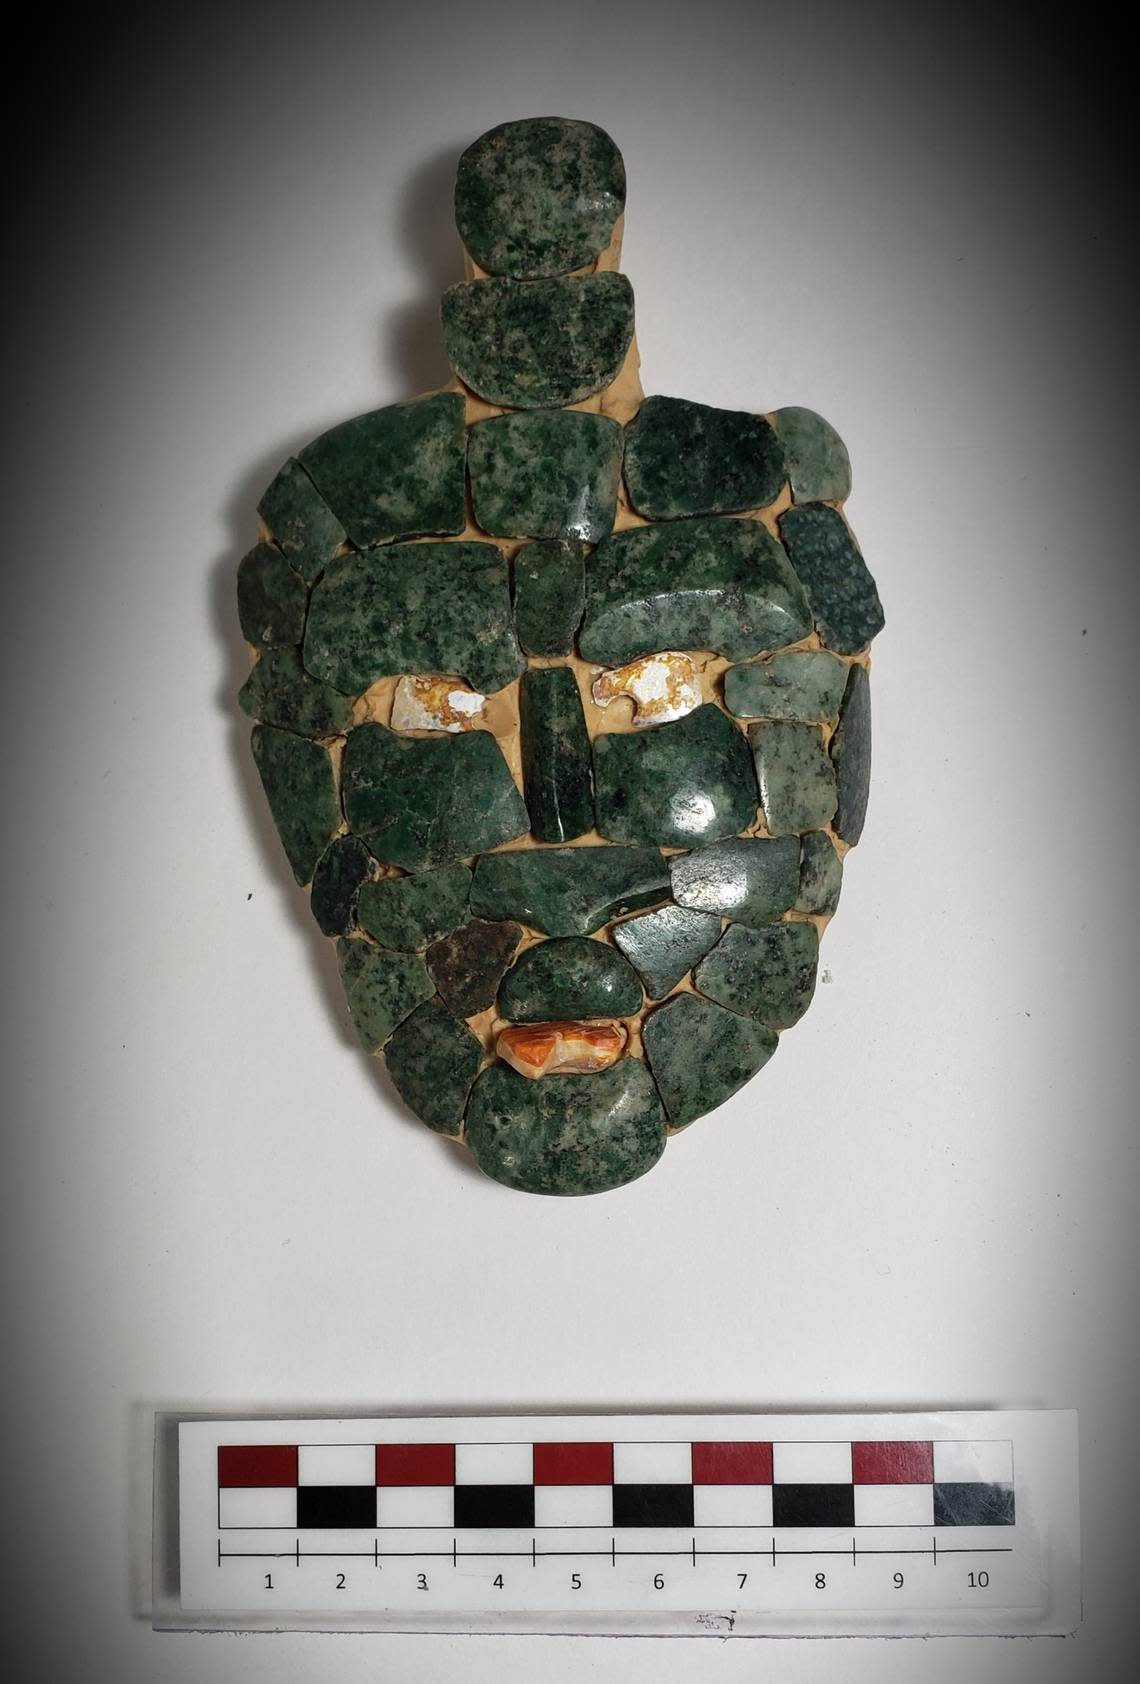 The jade mask found in the Maya burial. Francisco Estrada-Belli/Tulane University